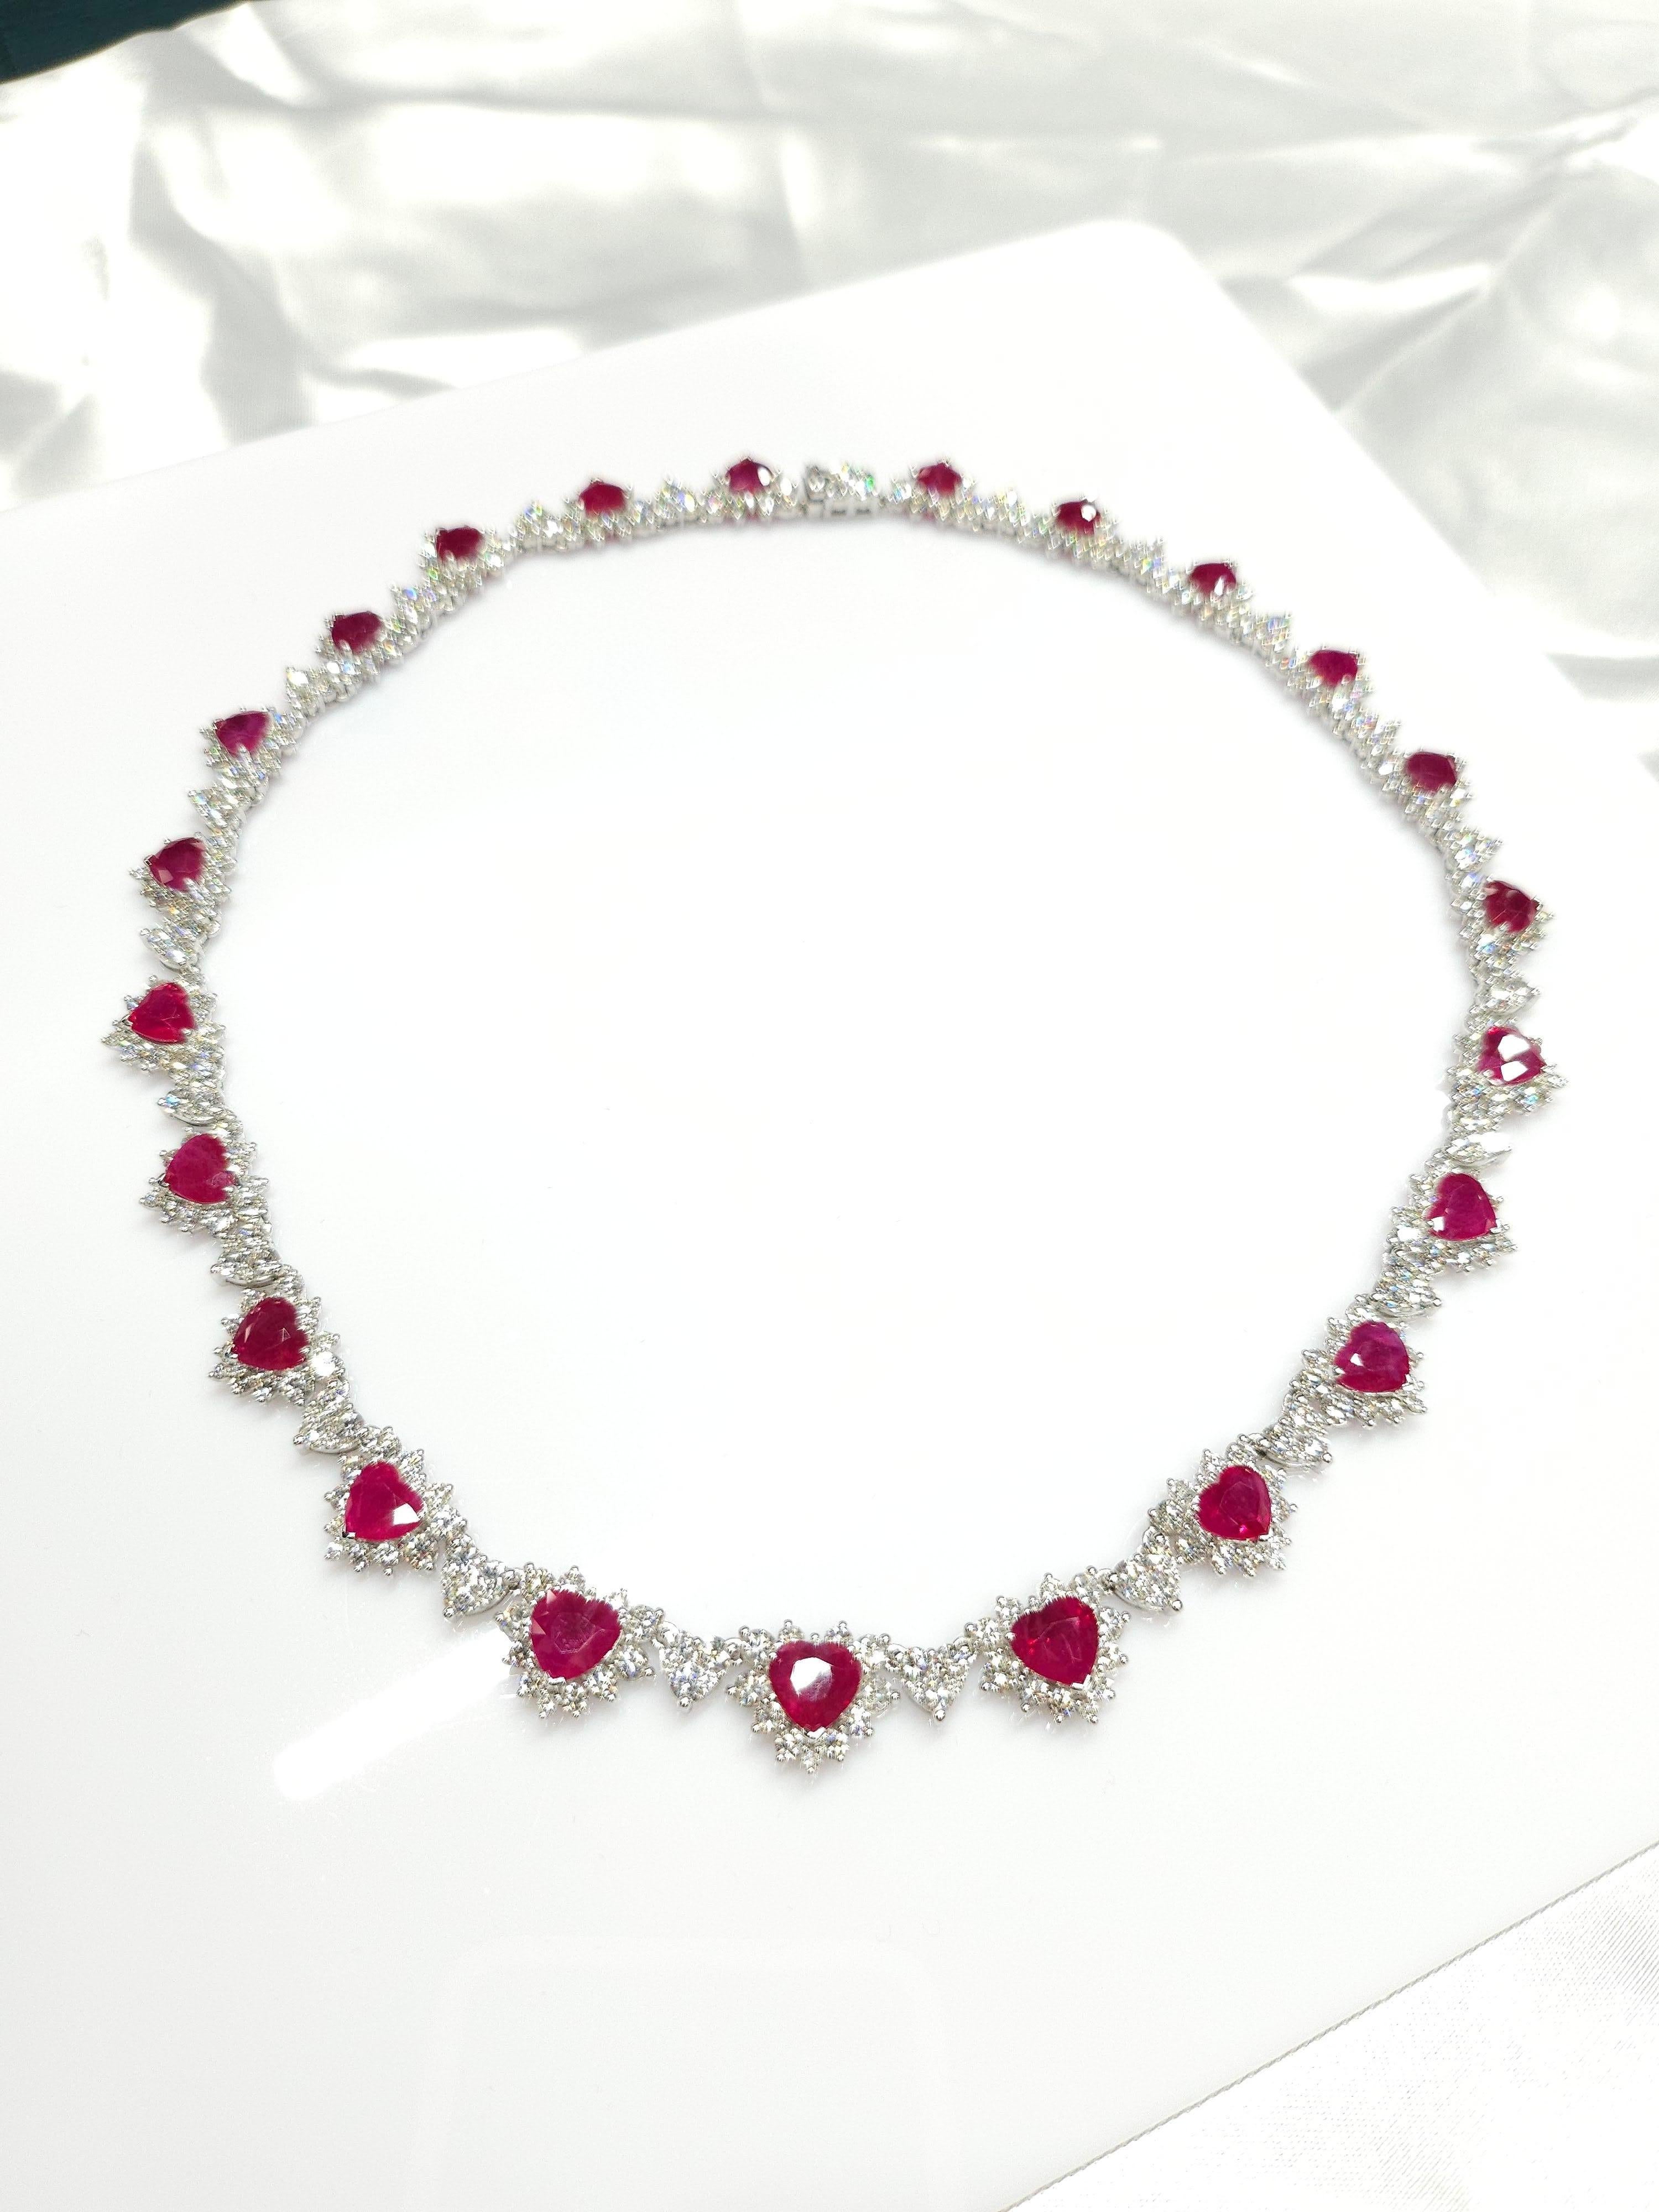 IGI Certified 26.58 Carat Burma Ruby & 18.85 Carat Diamond Necklace in 18K Gold For Sale 5